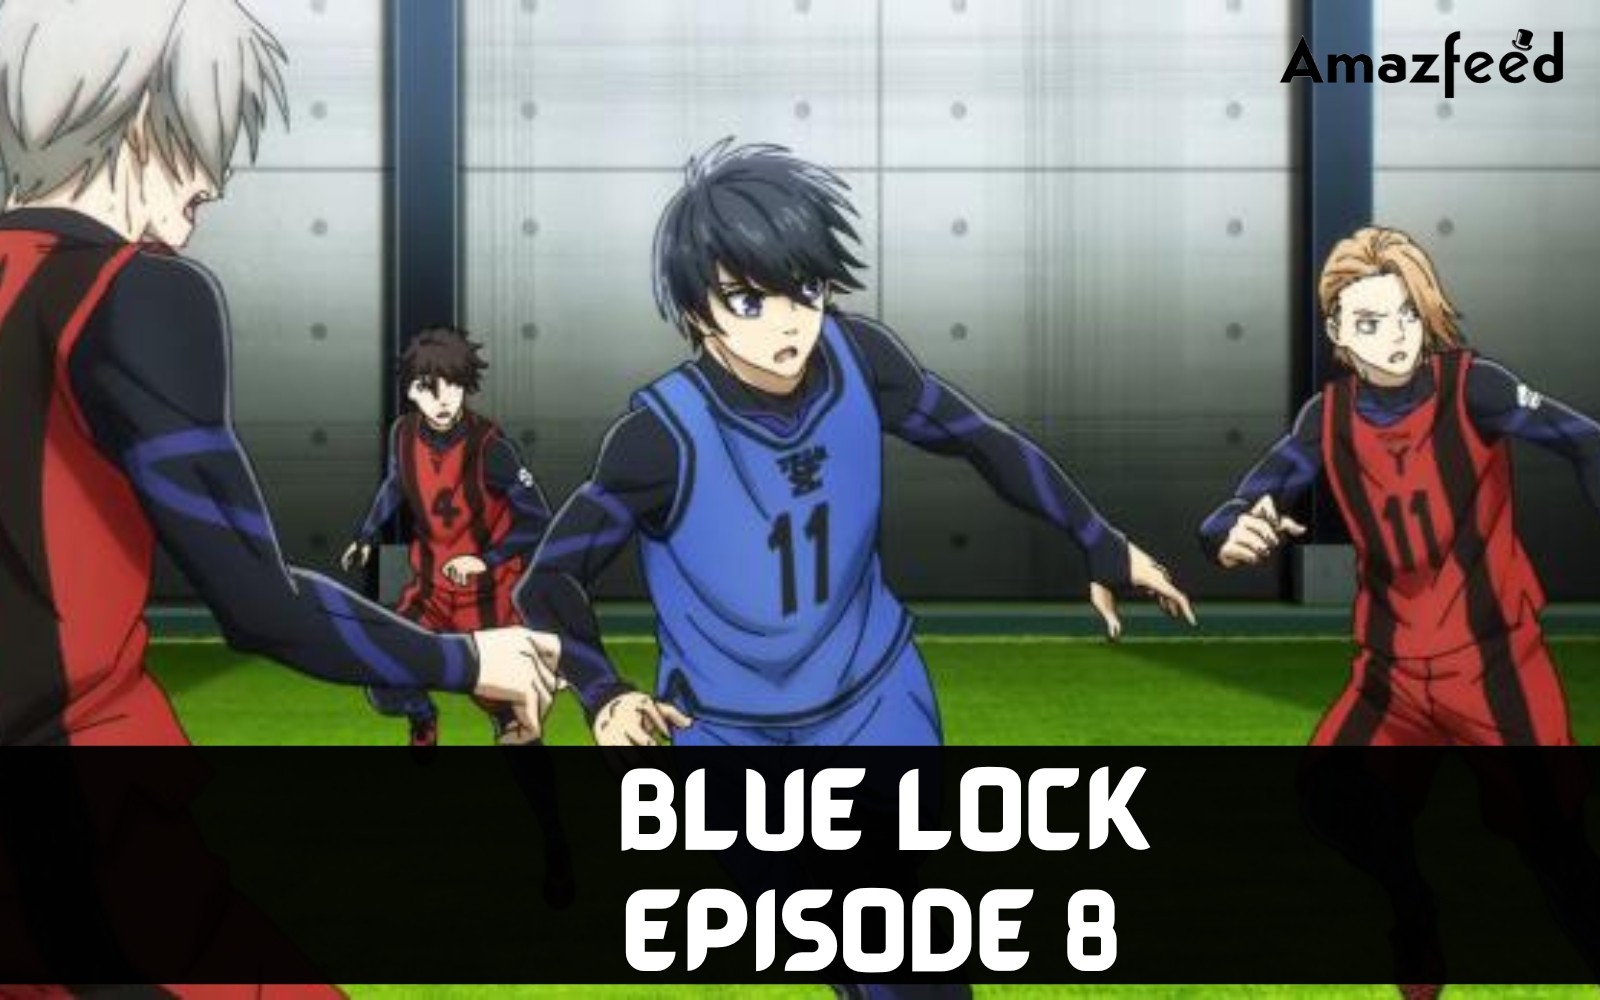 Bachira Meguru Shoots For the Goal in New Blue Lock TV Anime Character  Trailer - Crunchyroll News